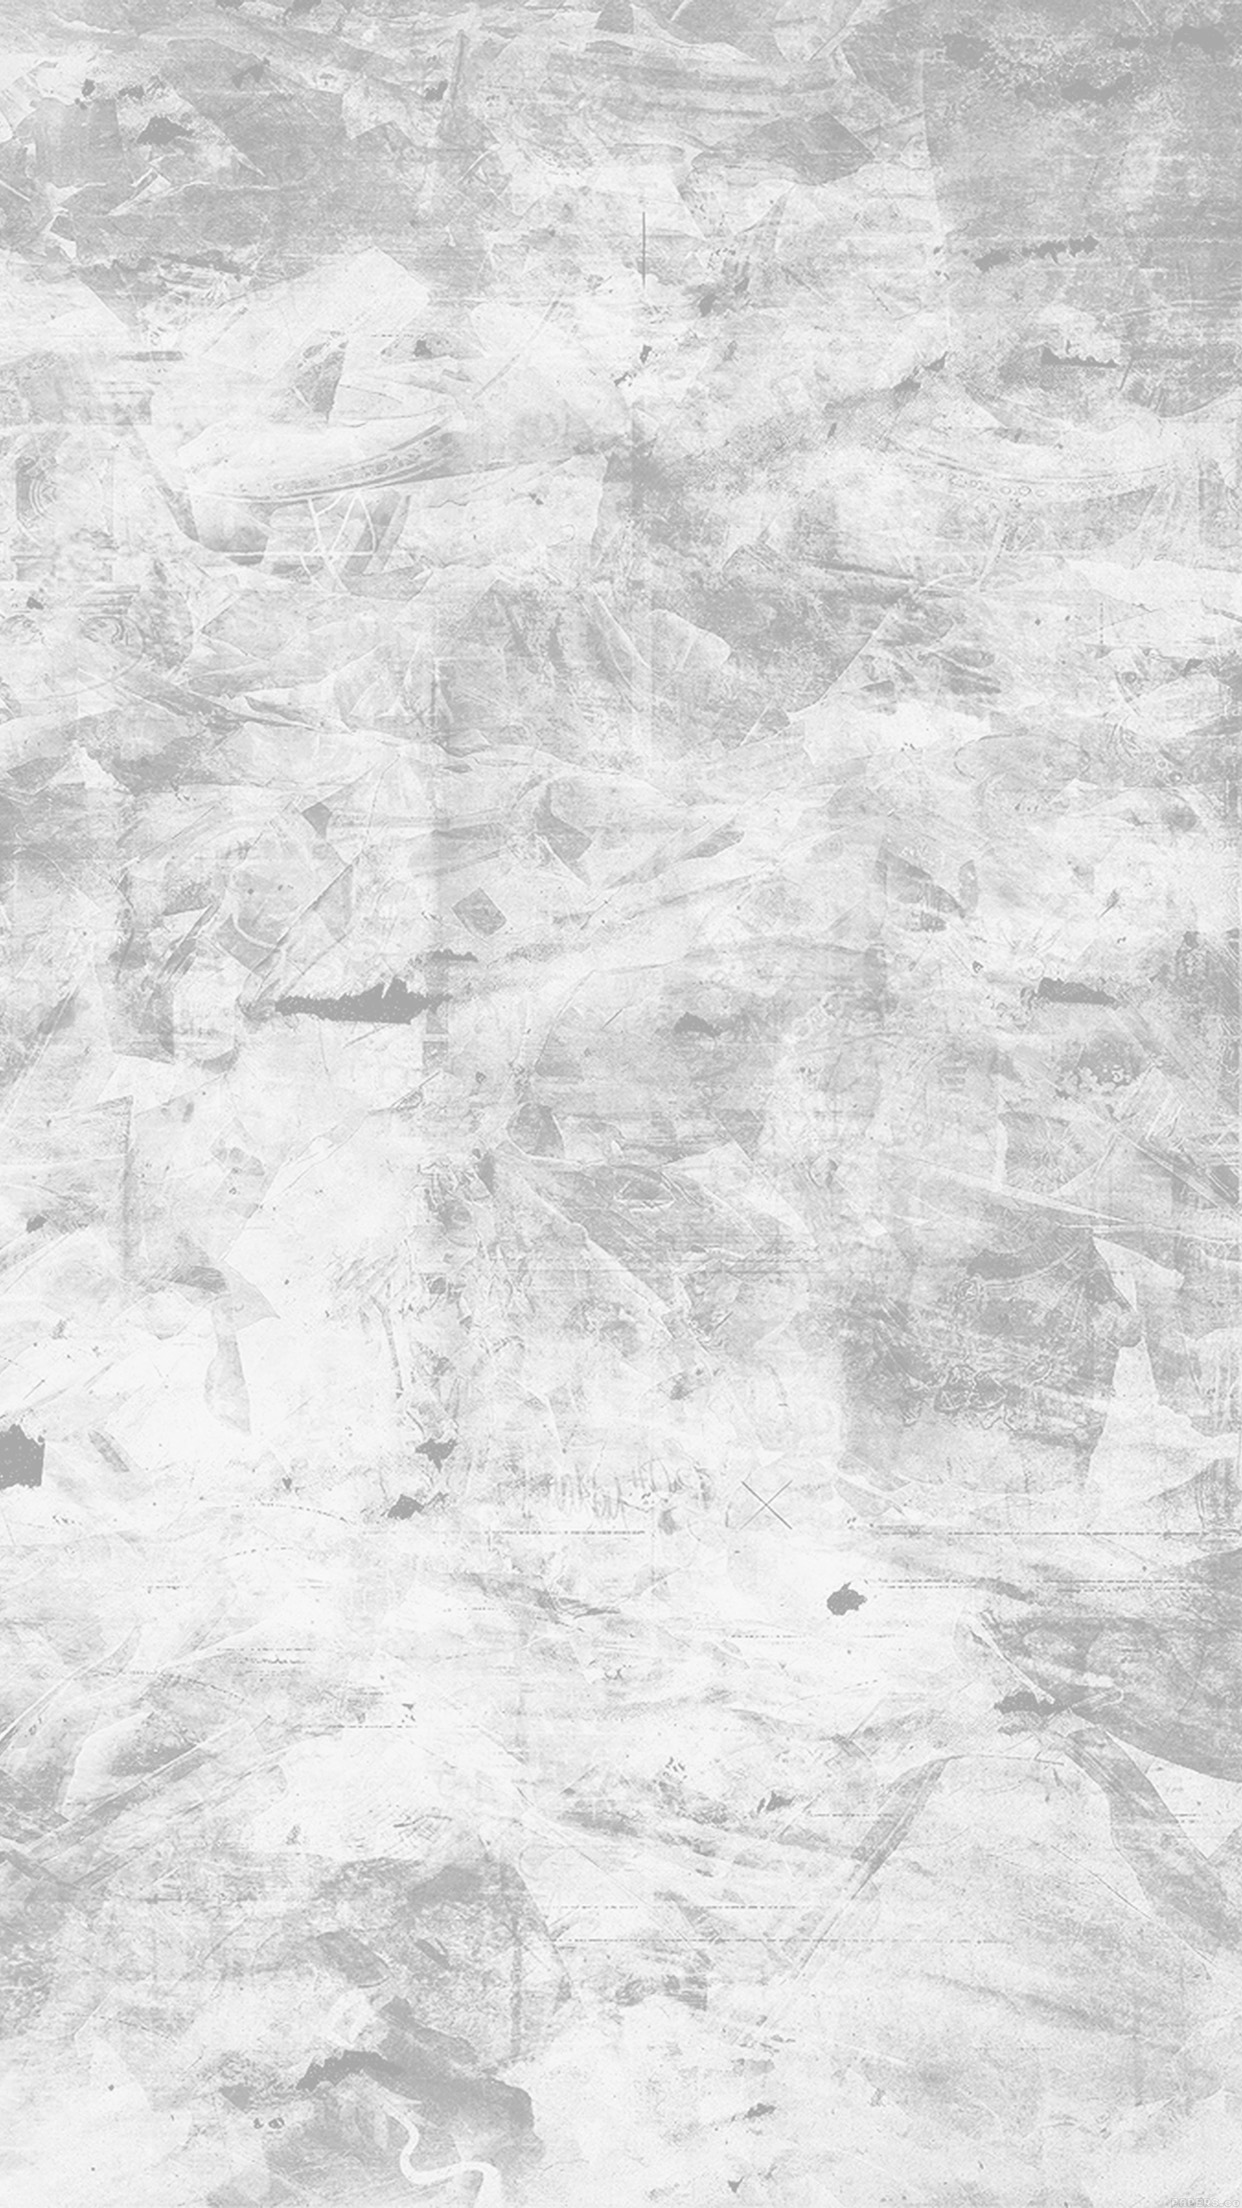 Wonder Lust Art Illust Grunge Abstract White Android wallpaper